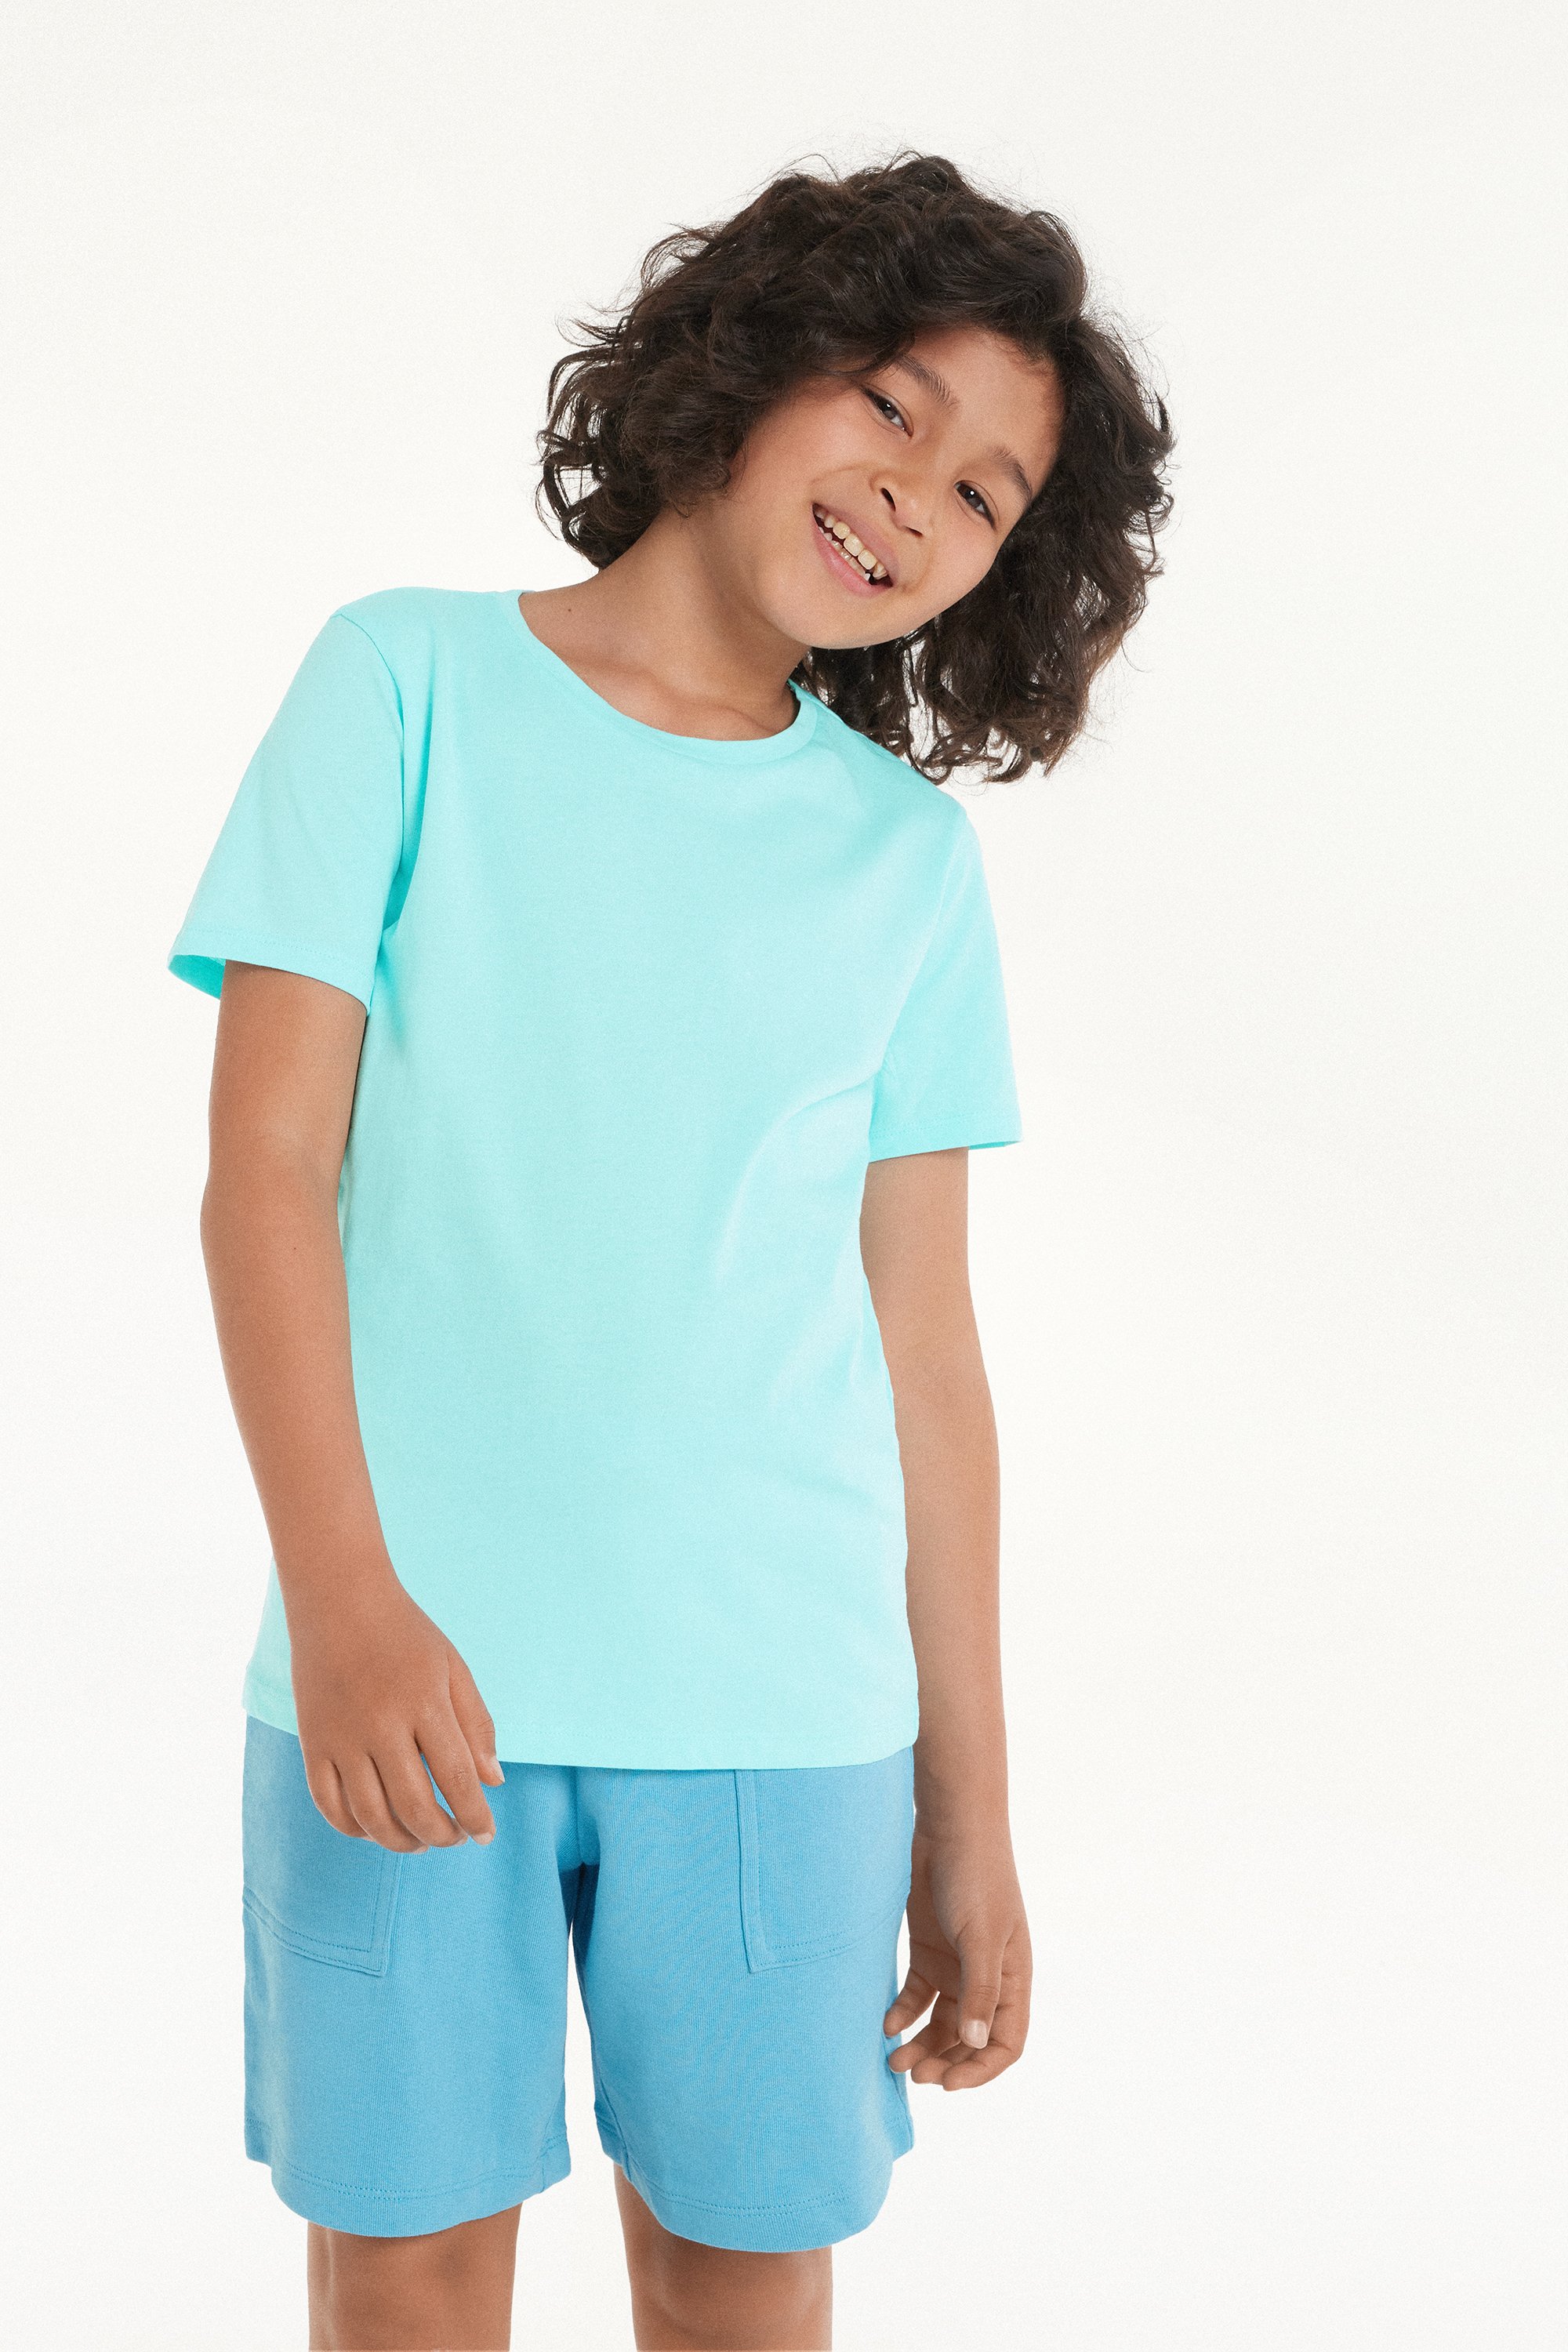 Camiseta Basic Cuello Redondo en 100 % Algodón Niños Unisex